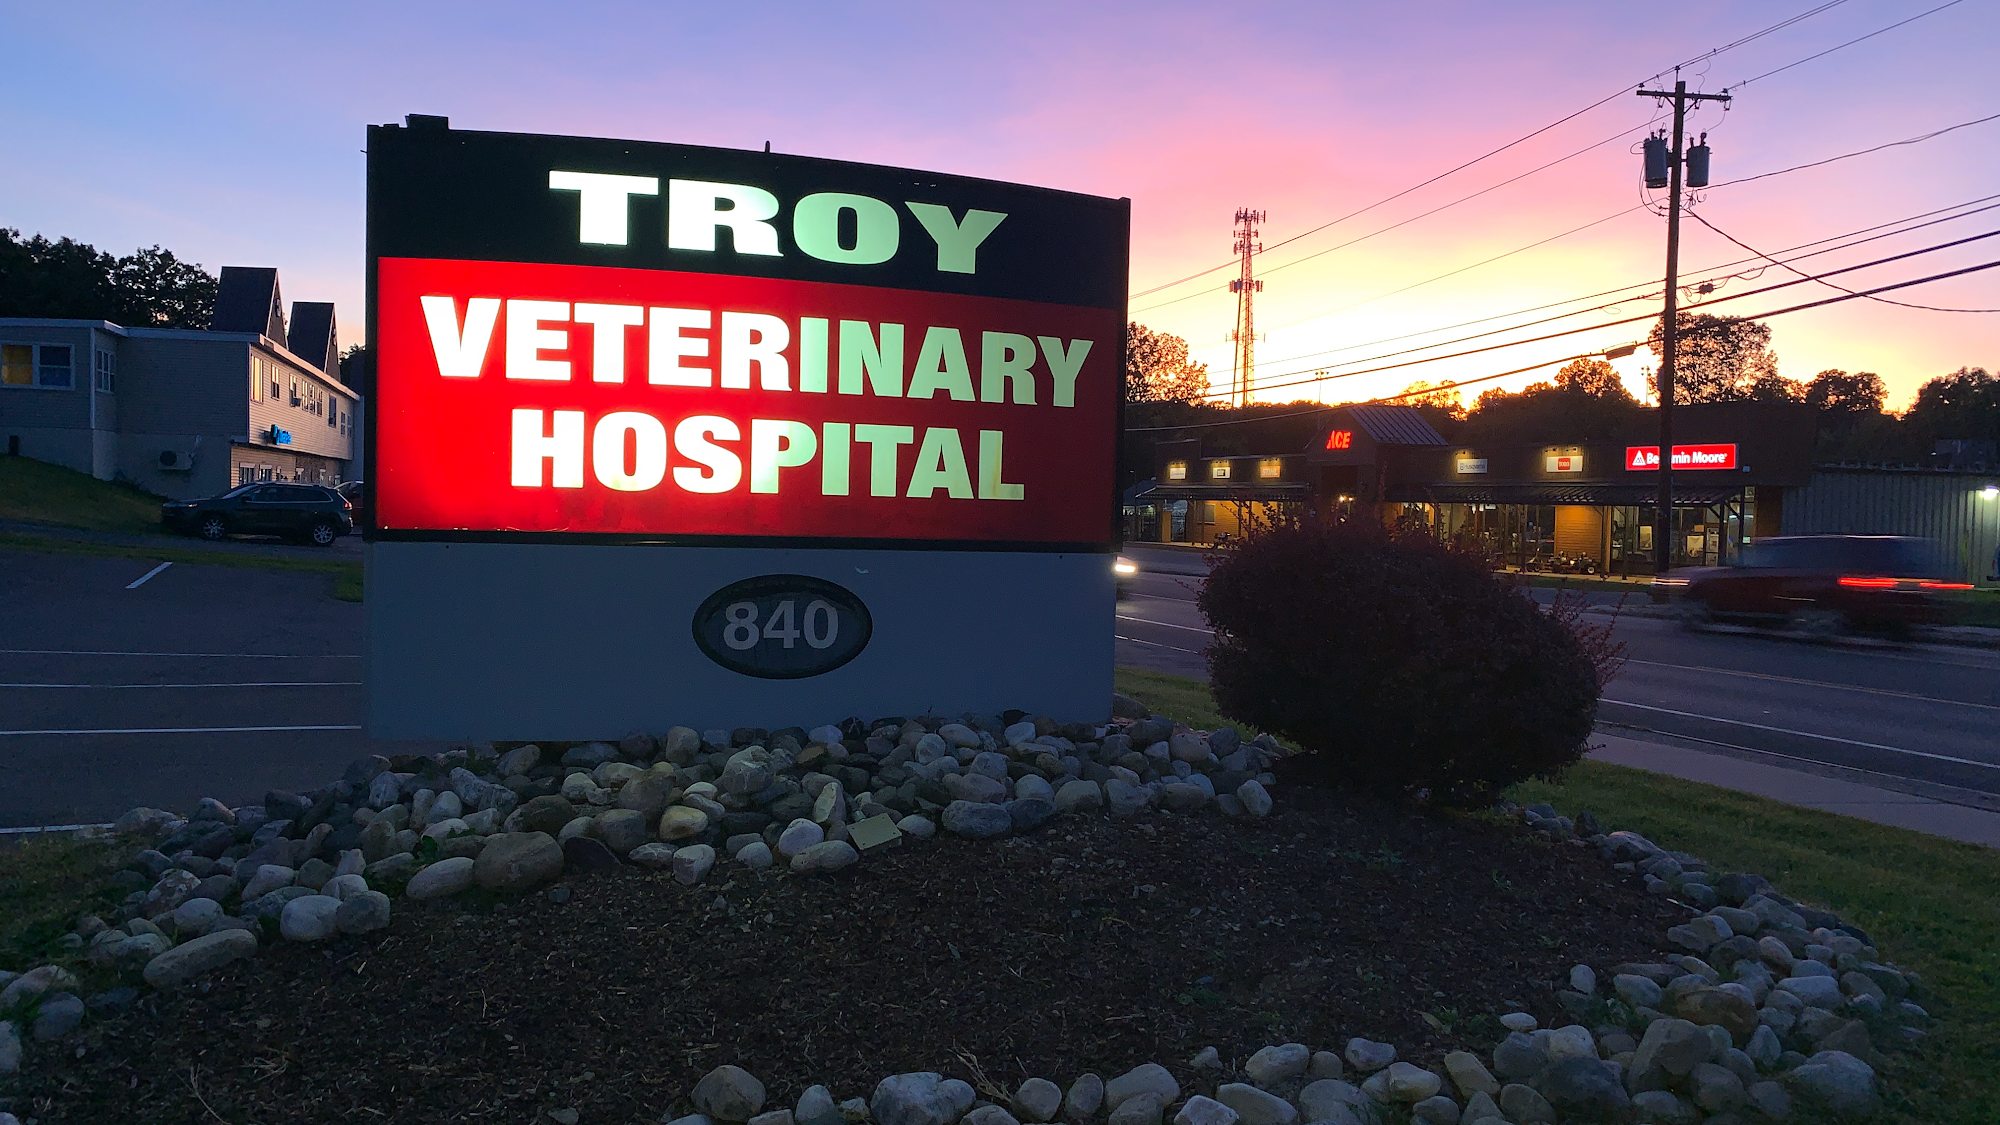 Troy Veterinary Hospital